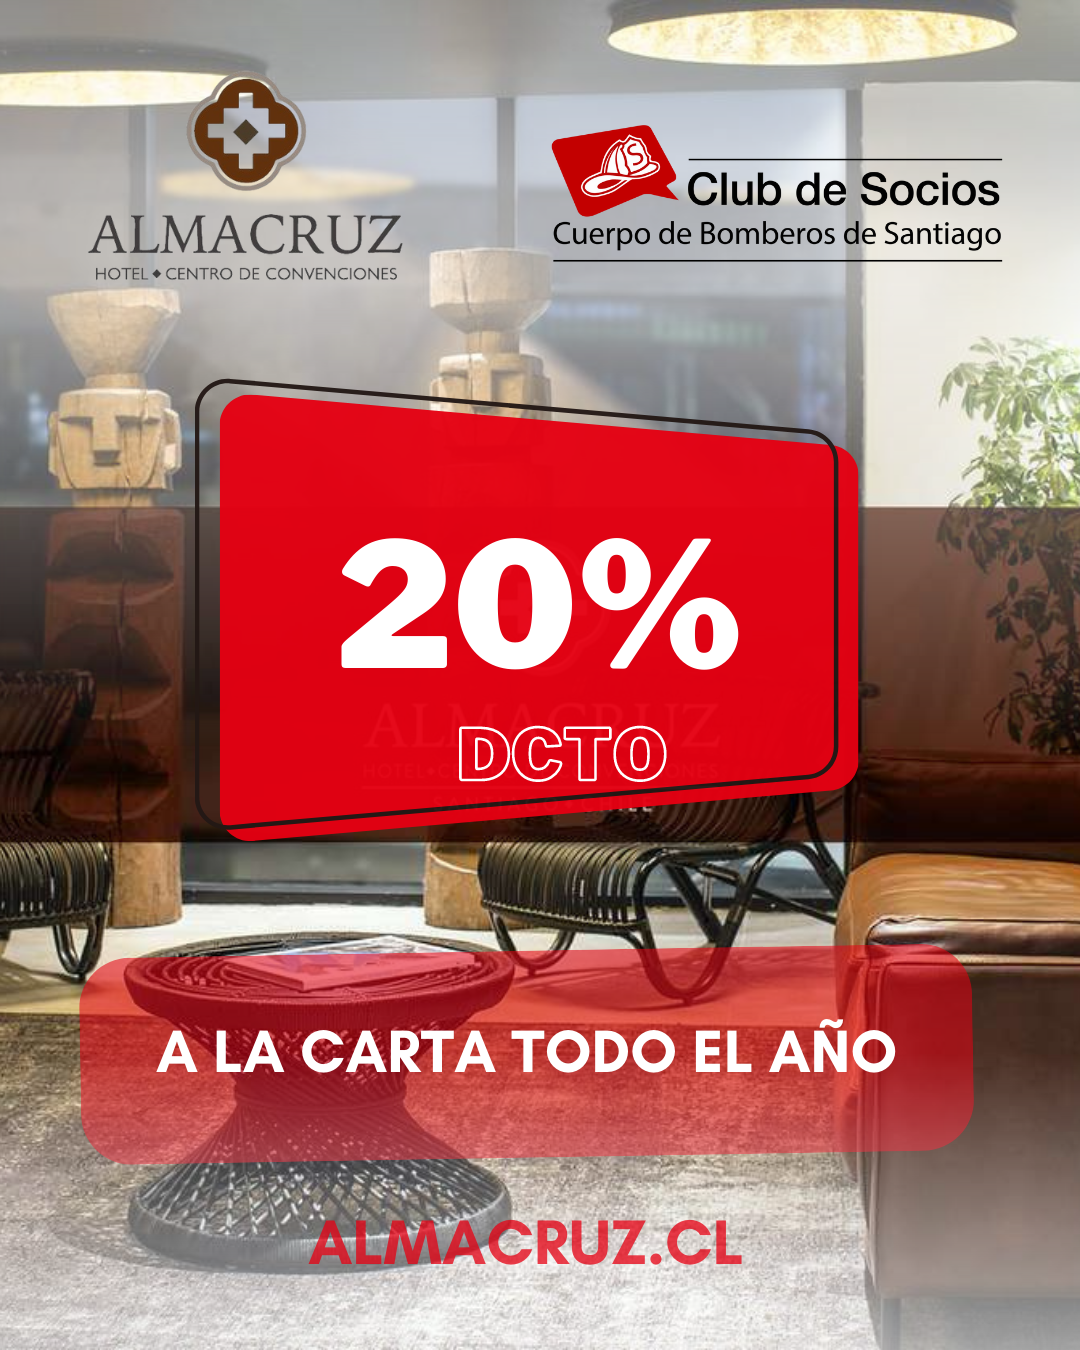 Hotel Alma Cruz